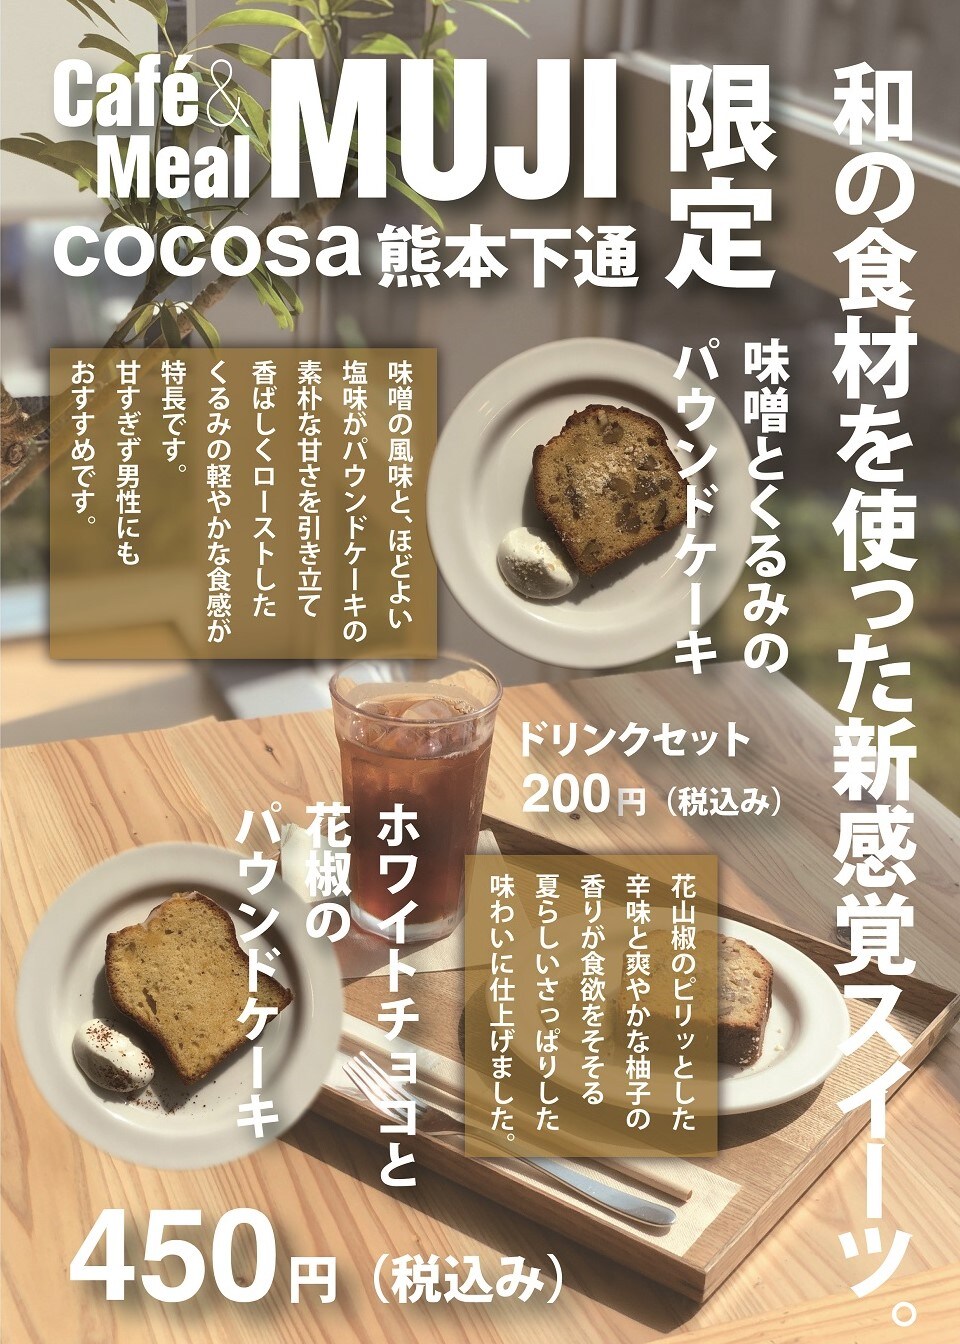 【Cafe'＆Meal MUJI COCOSA熊本下通】